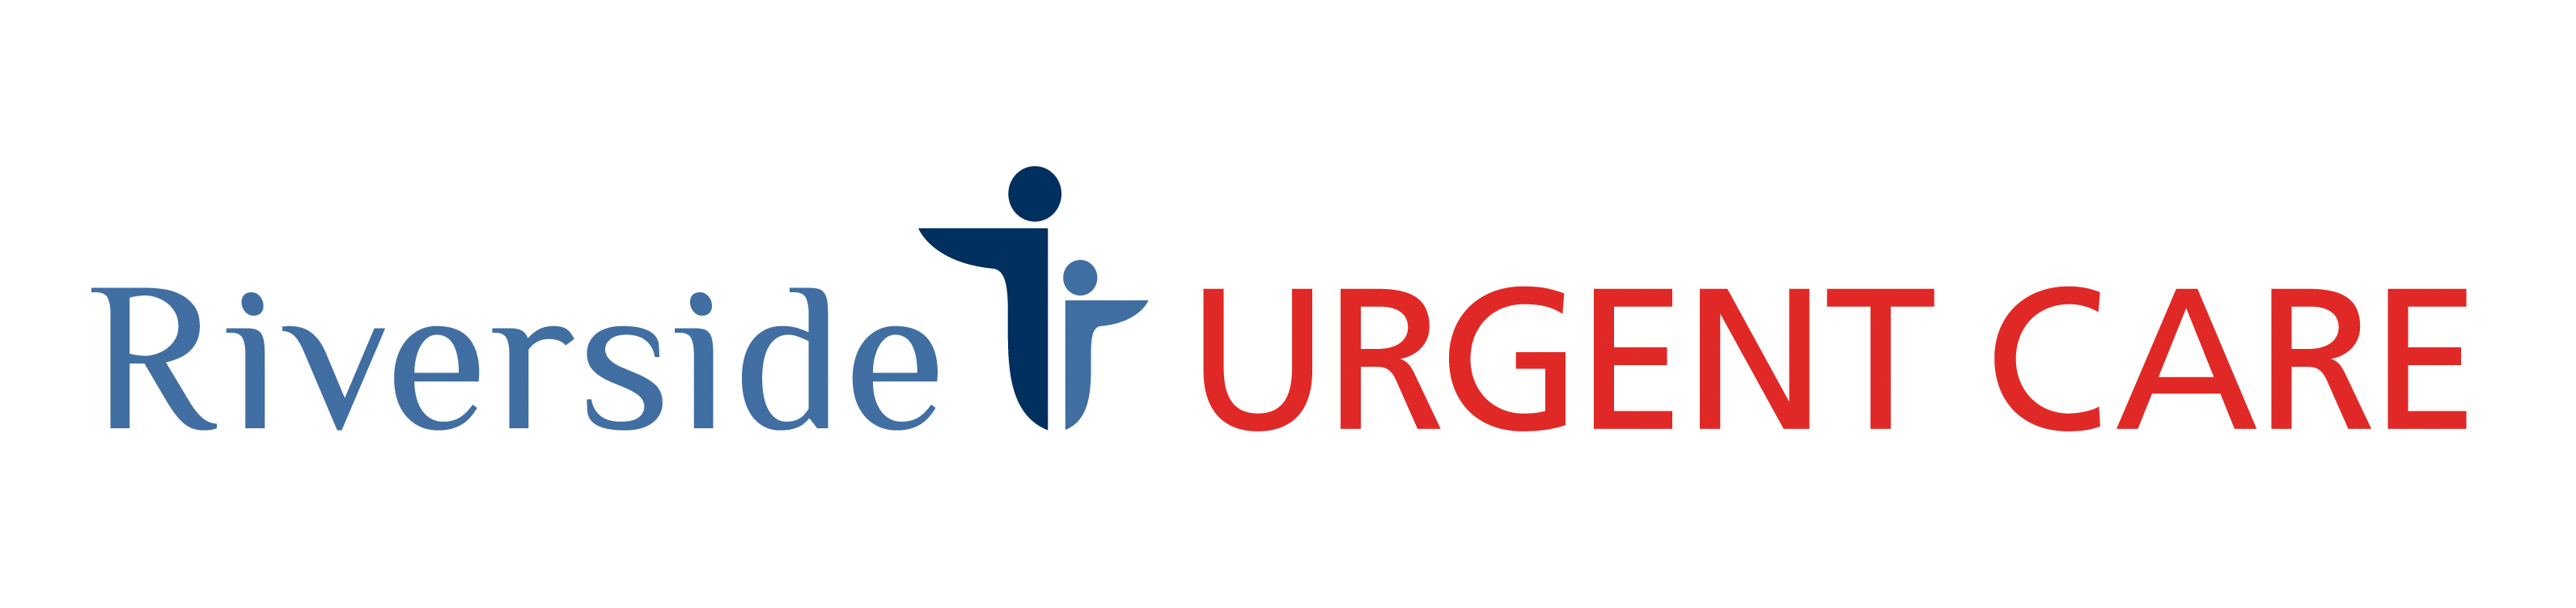 Riverside Urgent Care - Ewing Logo